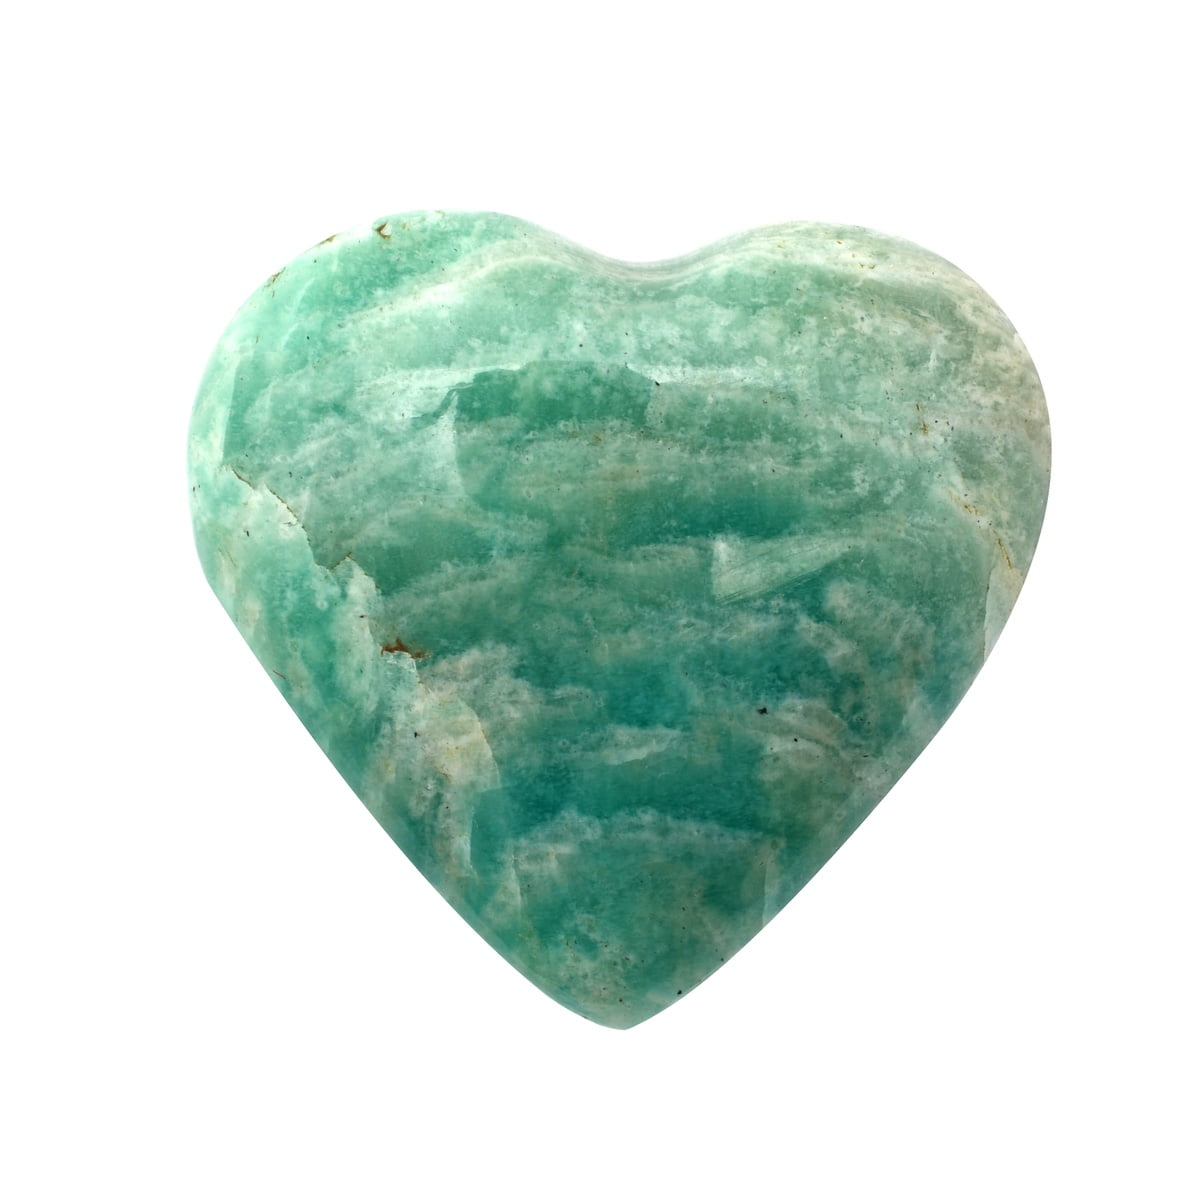 Tumbled By WholesaleGemShop Metaphysical Healing Gift Reiki Genuine Green Mica Zade Tumbled Stones Chakra Stone